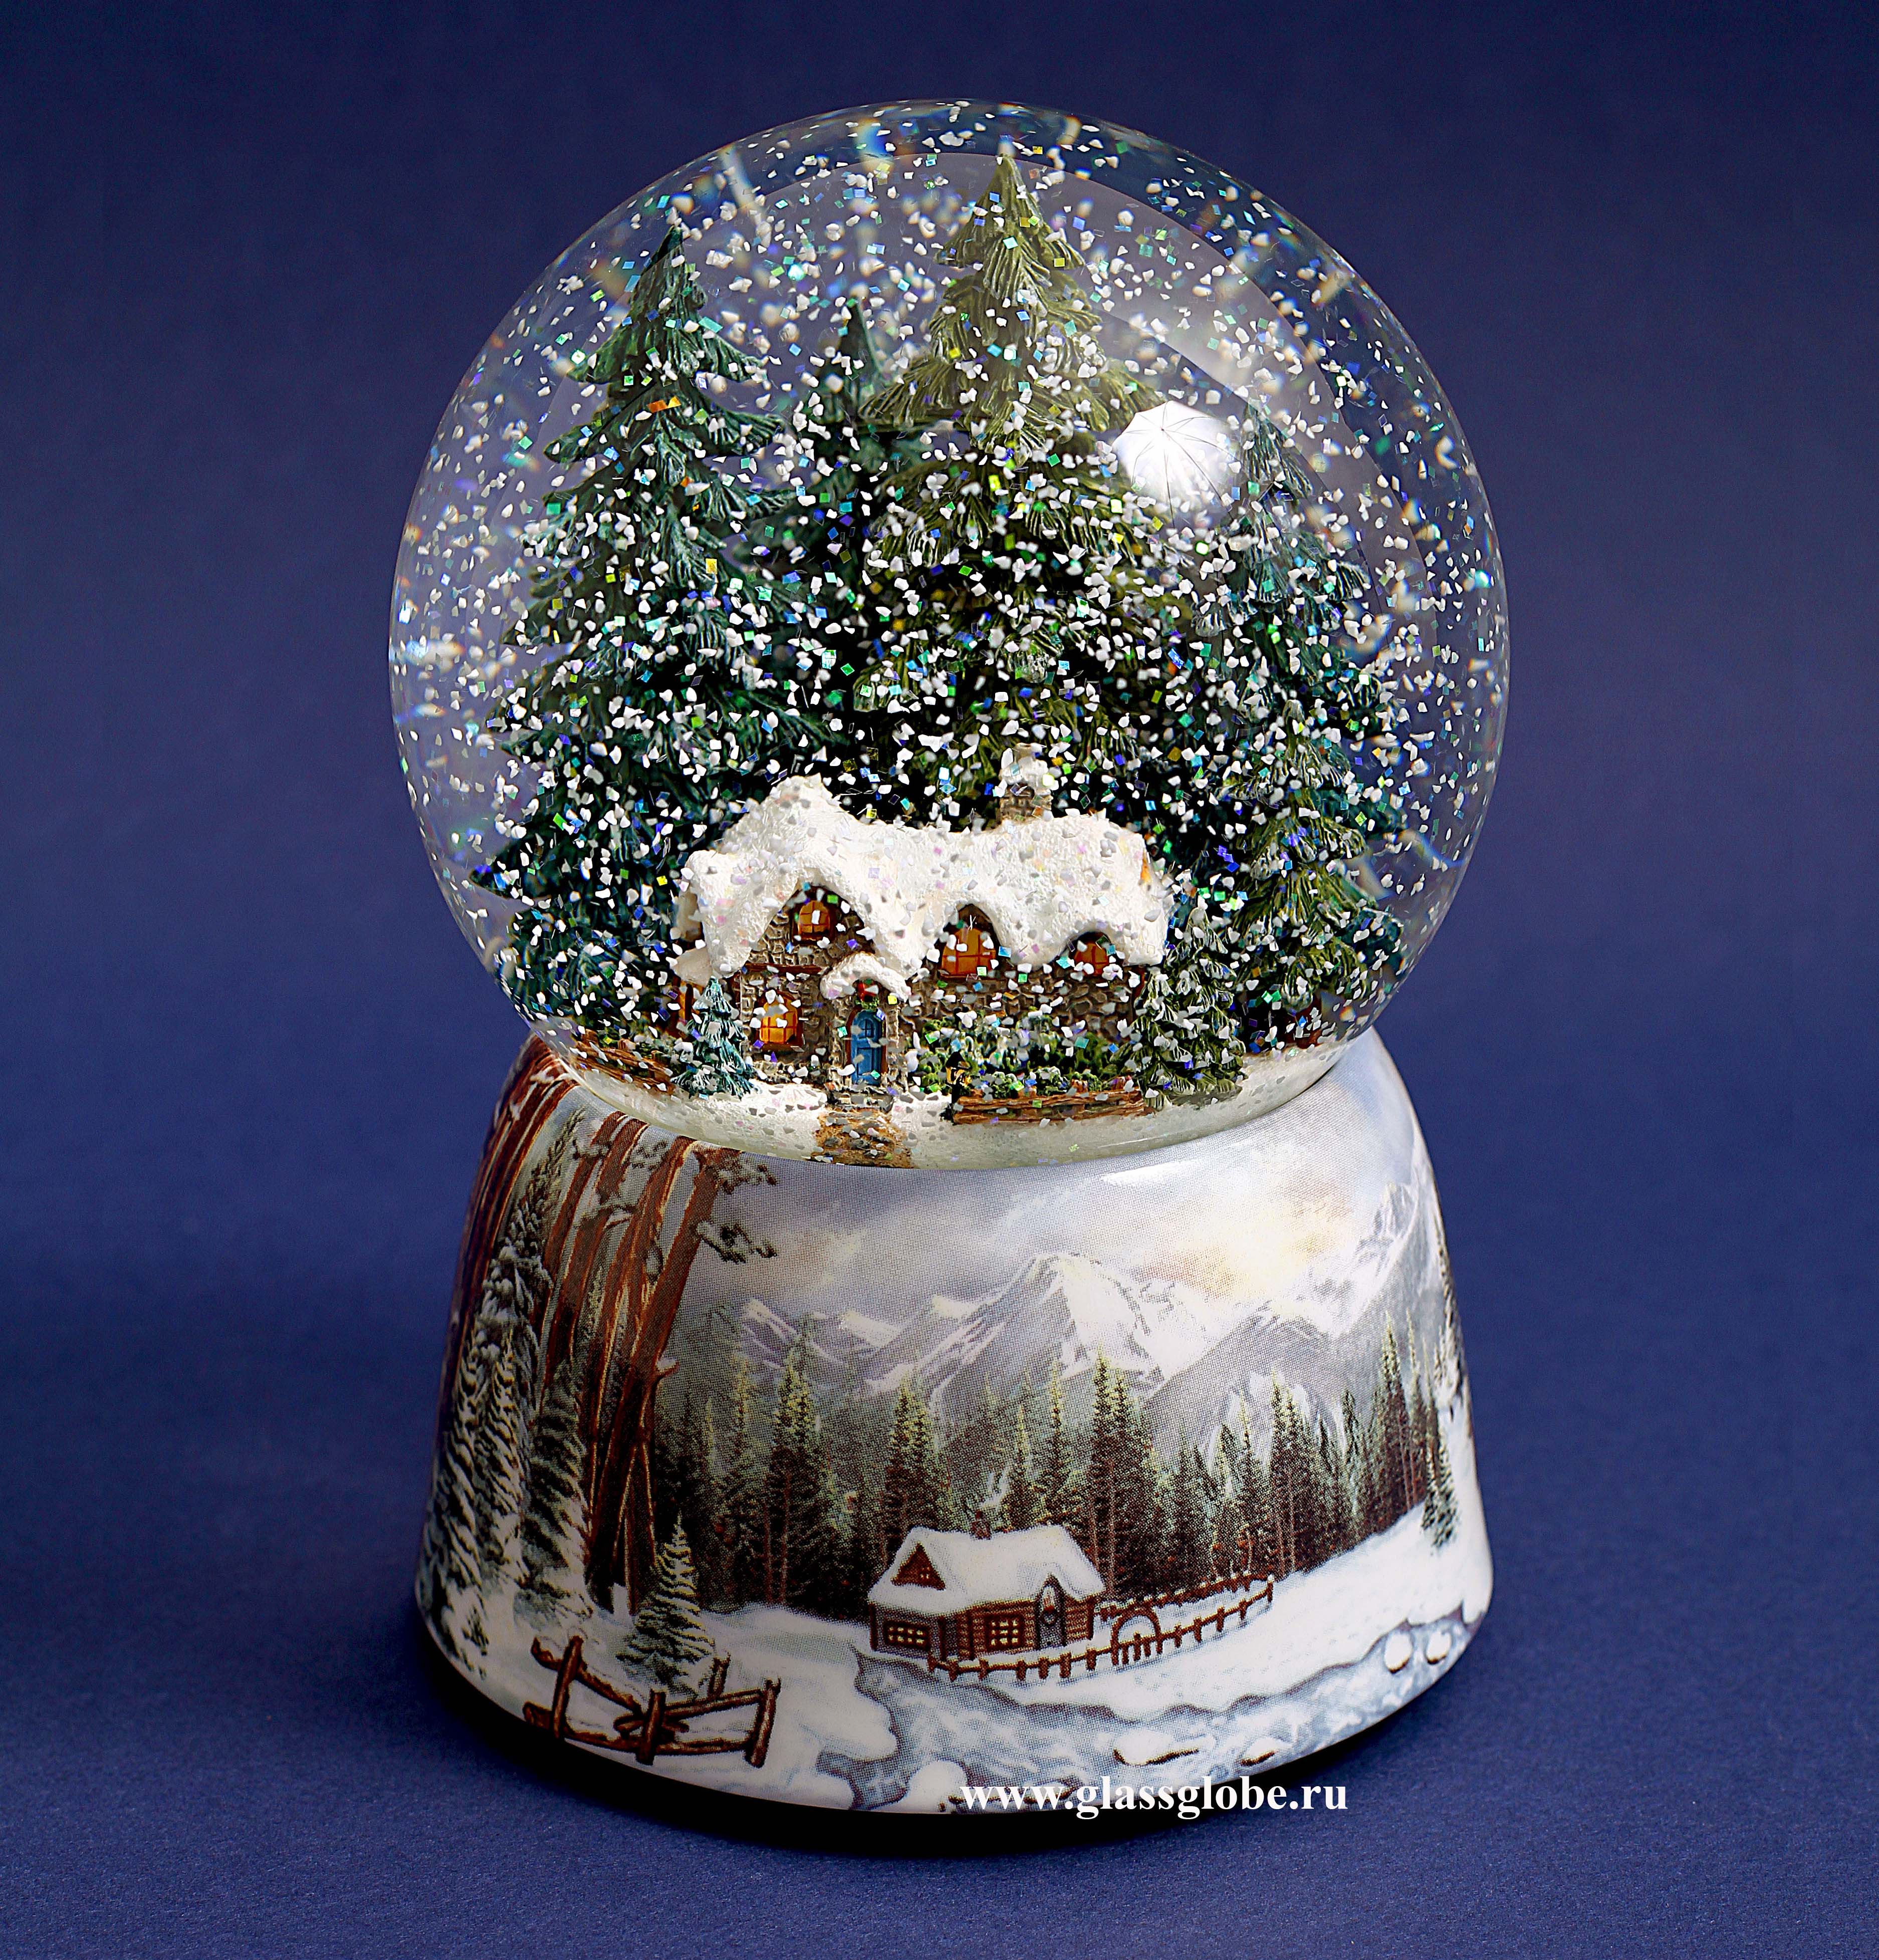 Шар падающий снег. Снежный шар Glassglobe. Midland снежный шар. Снежный шар Джейкобстаун. Снежный шар Glassglobe "домик в лесу".